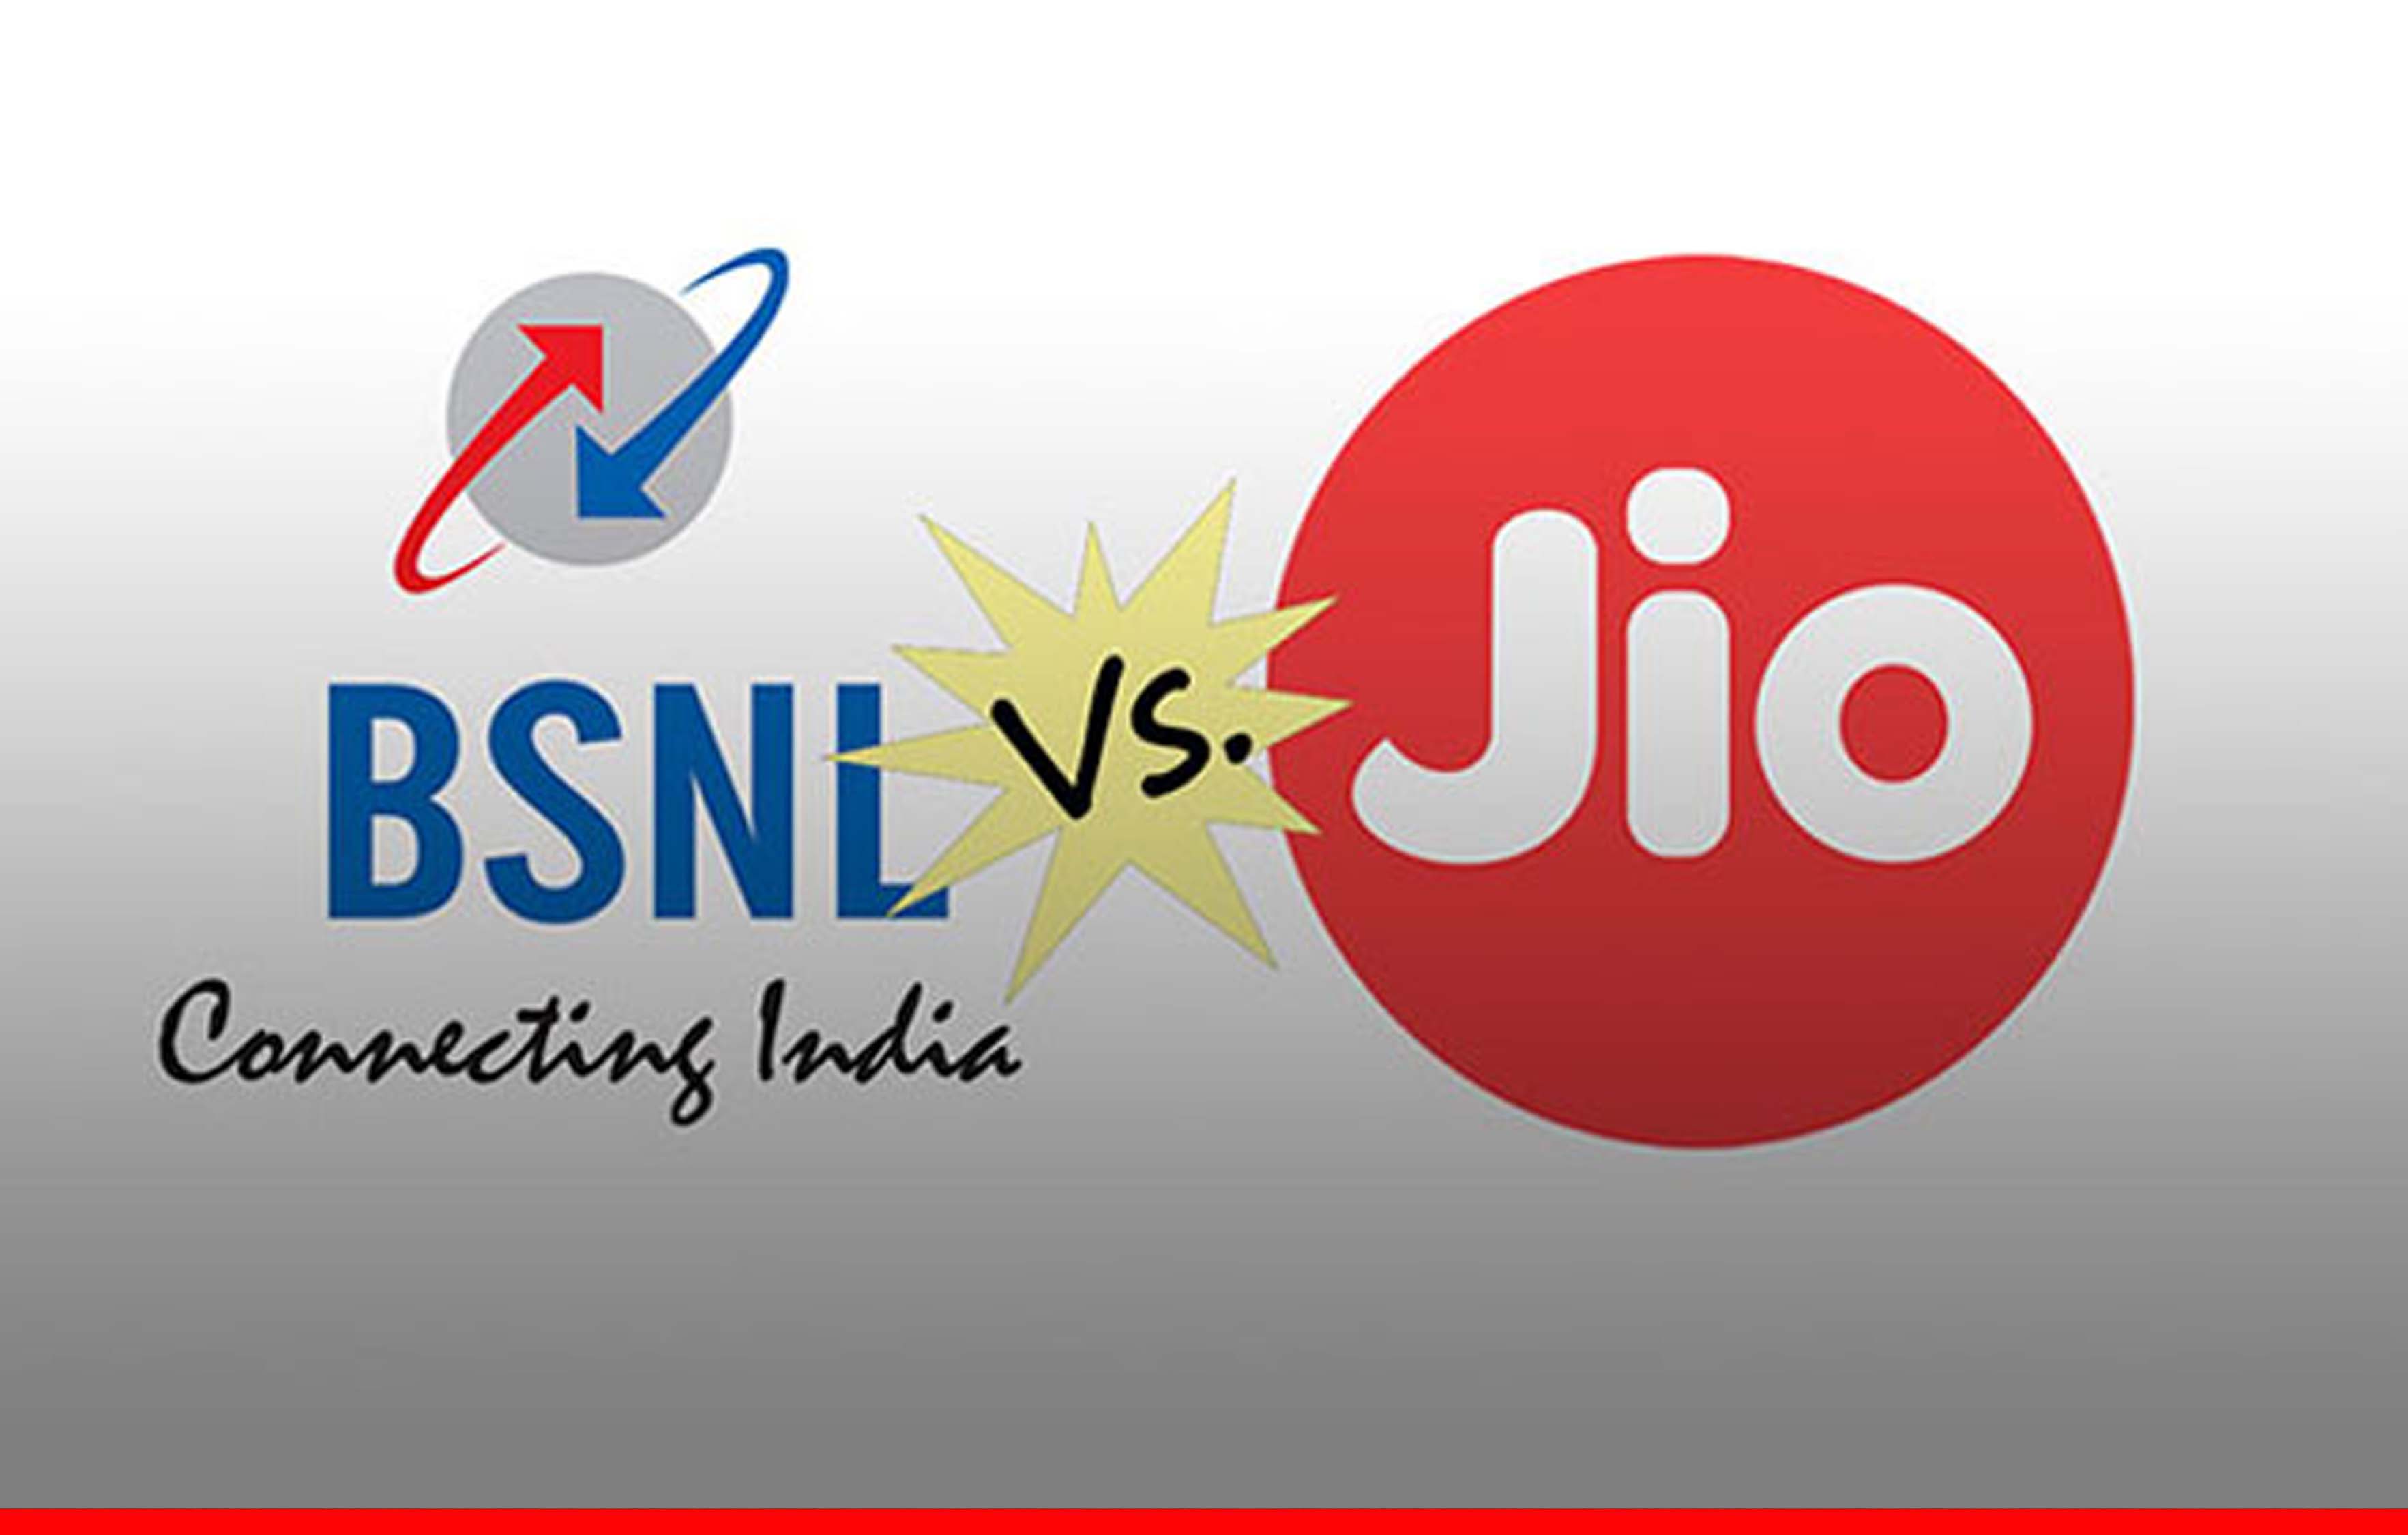 जियो के 98 रुपये वाले नए रिचार्ज से बेहतर है BSNL का 97 रुपये वाला प्लान